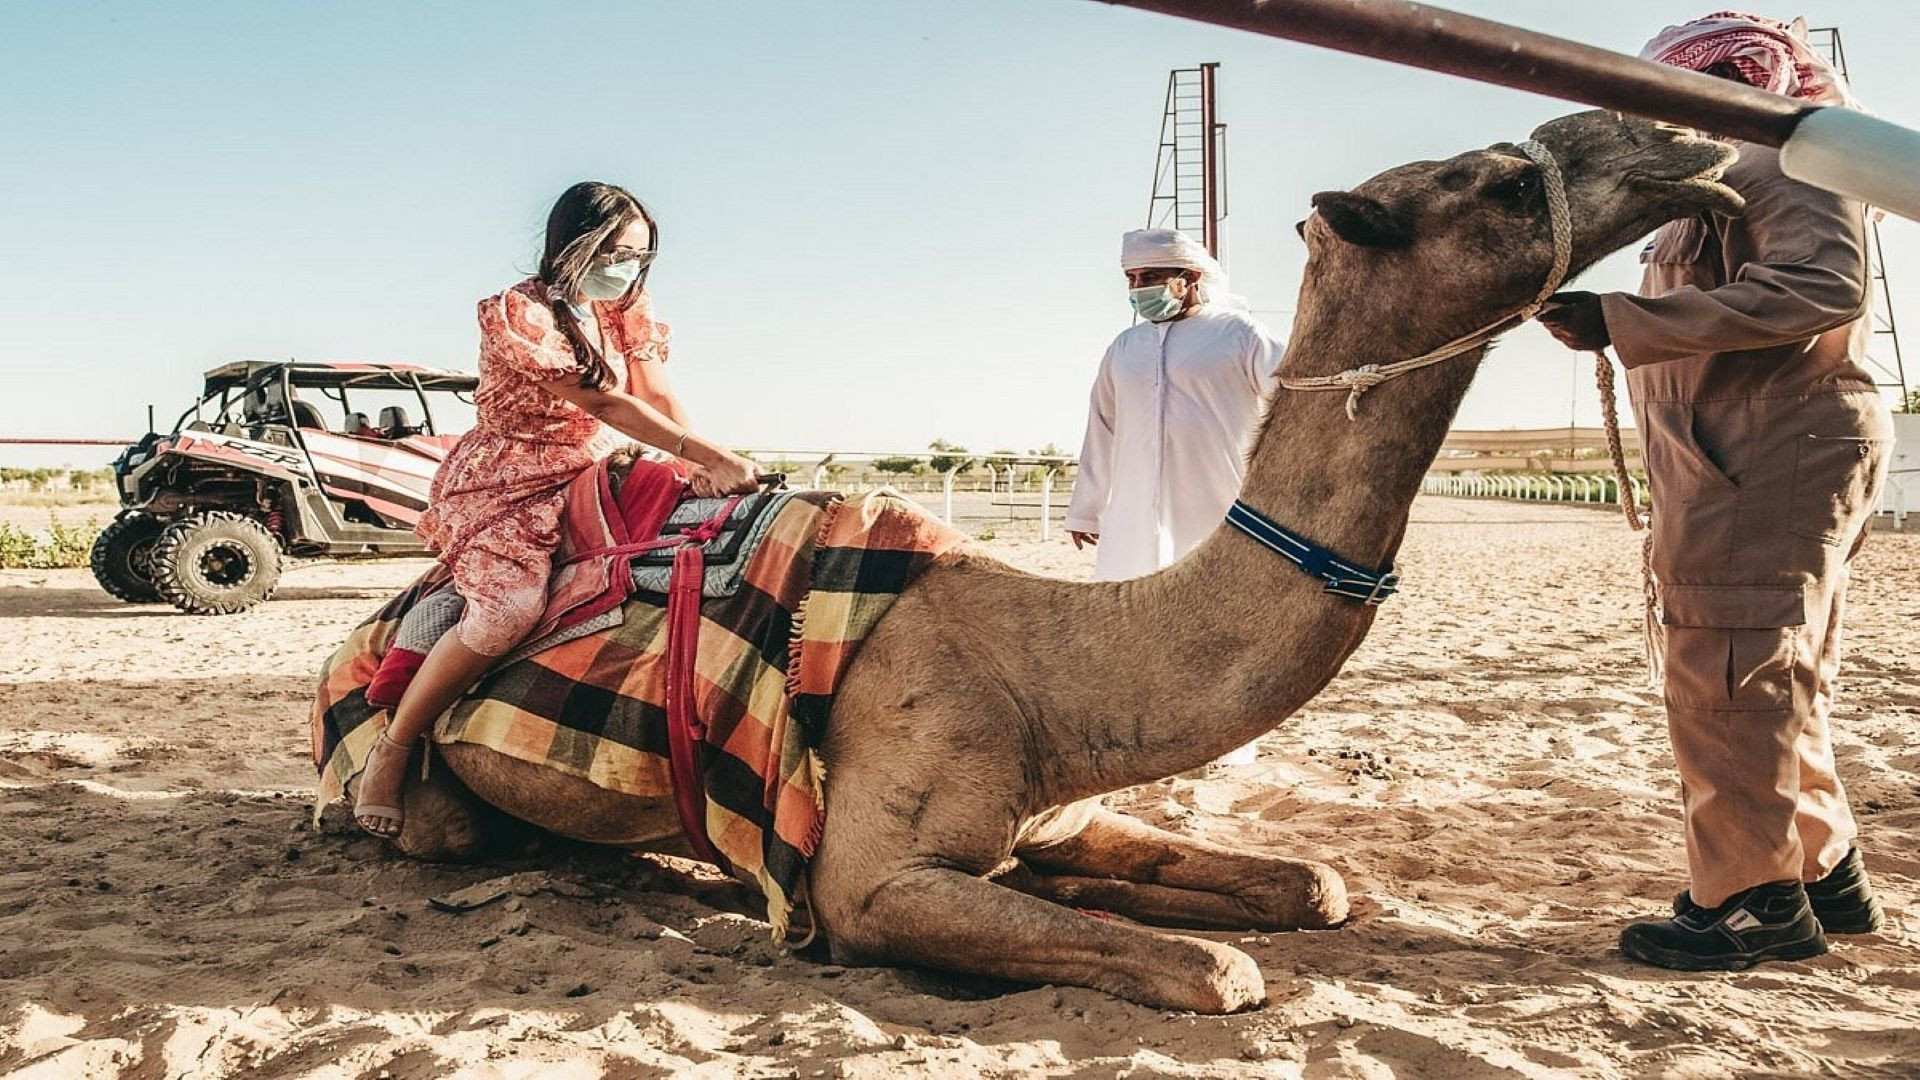 Dubai Royal Camel Racing Club